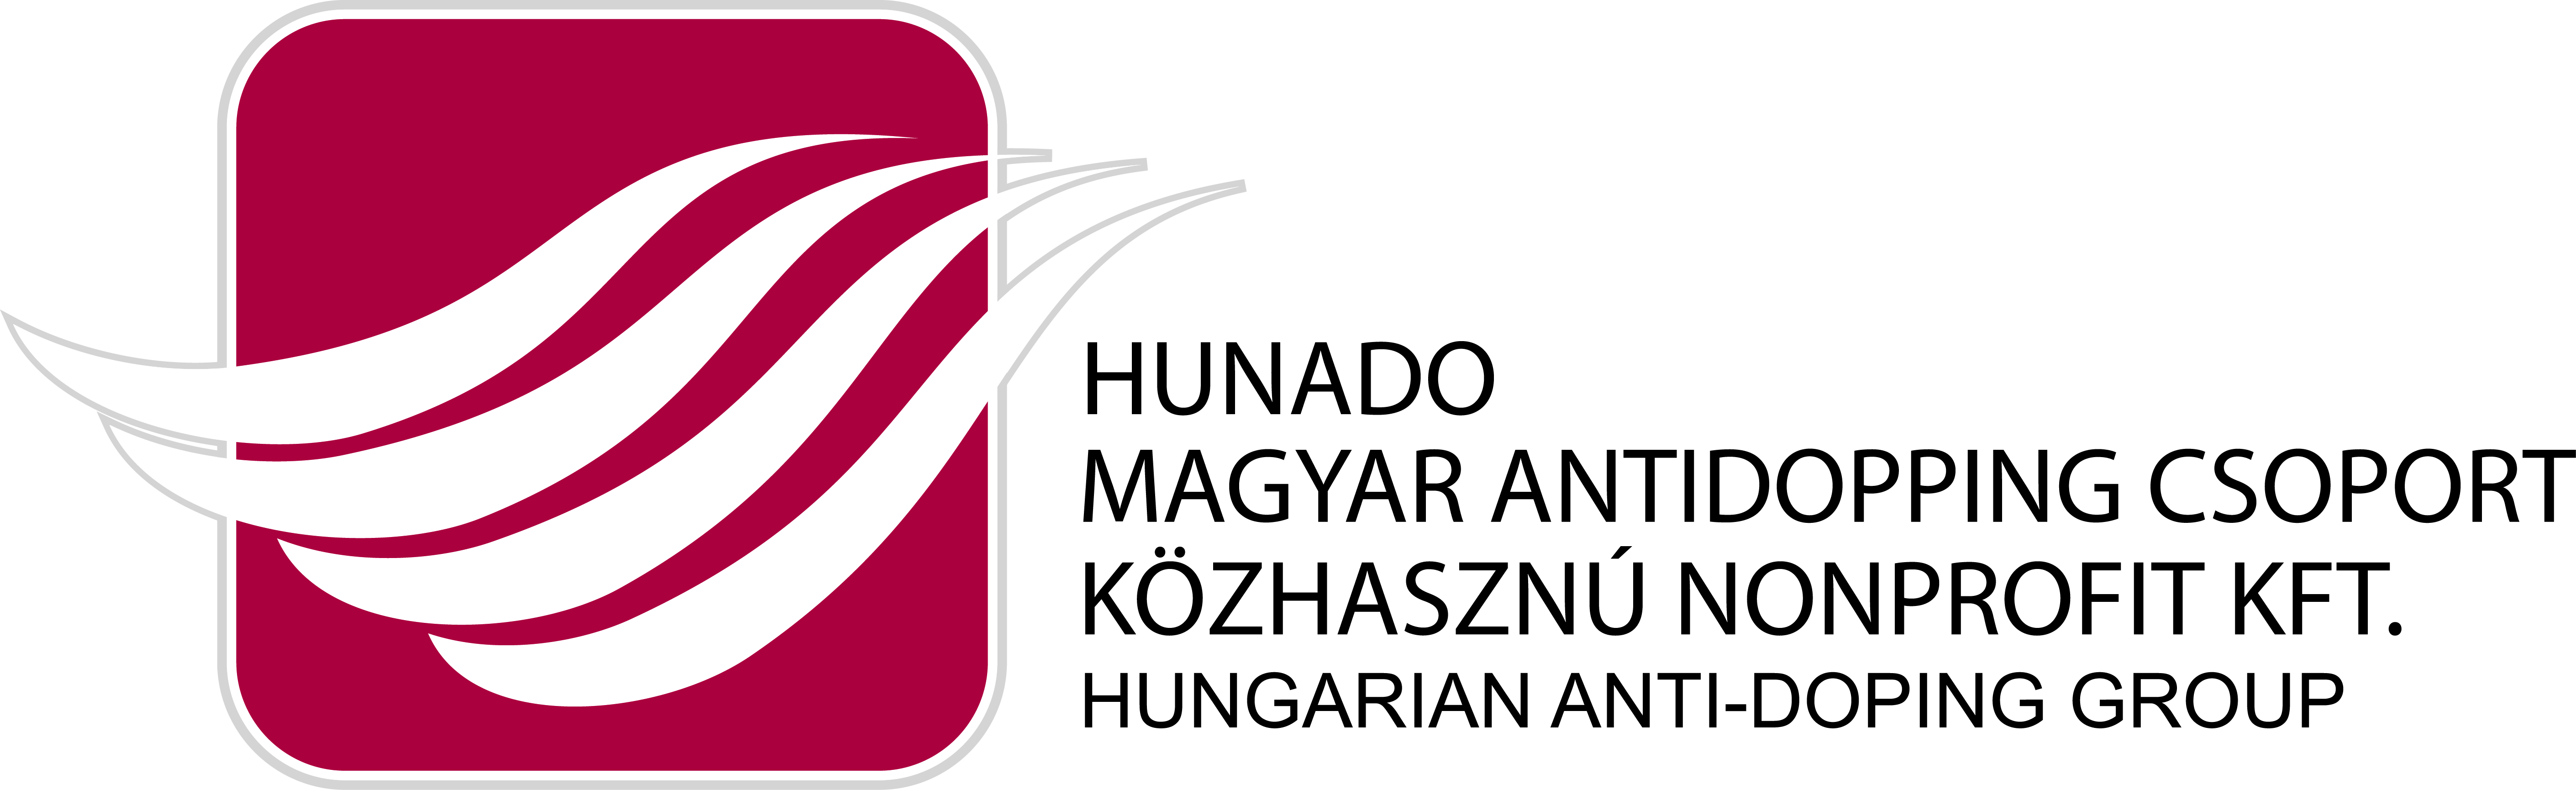 HUNADO logo